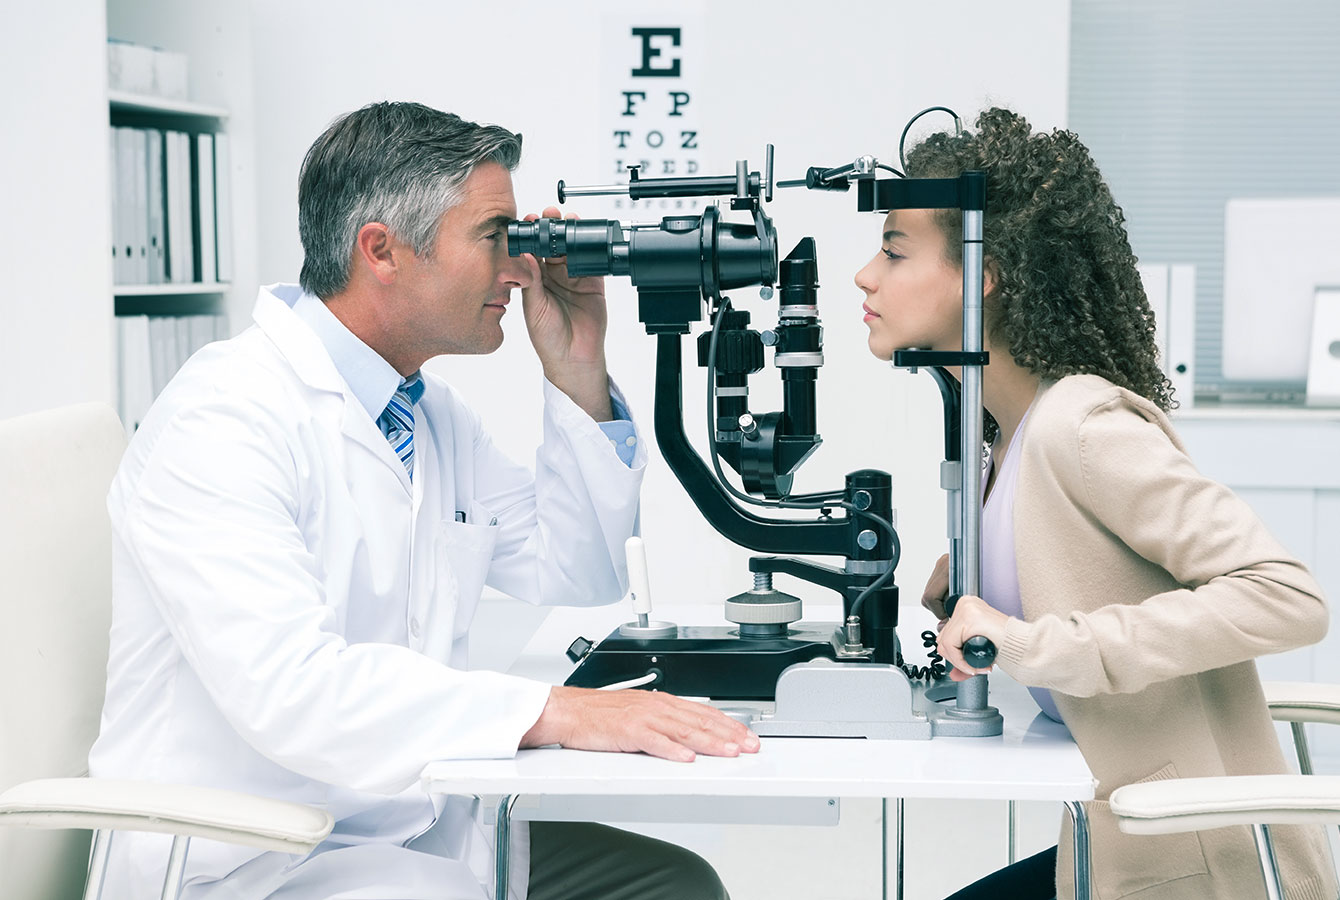 Profesional perawatan mata sedang menguji mata pasien wanita di klinik dokter mata.